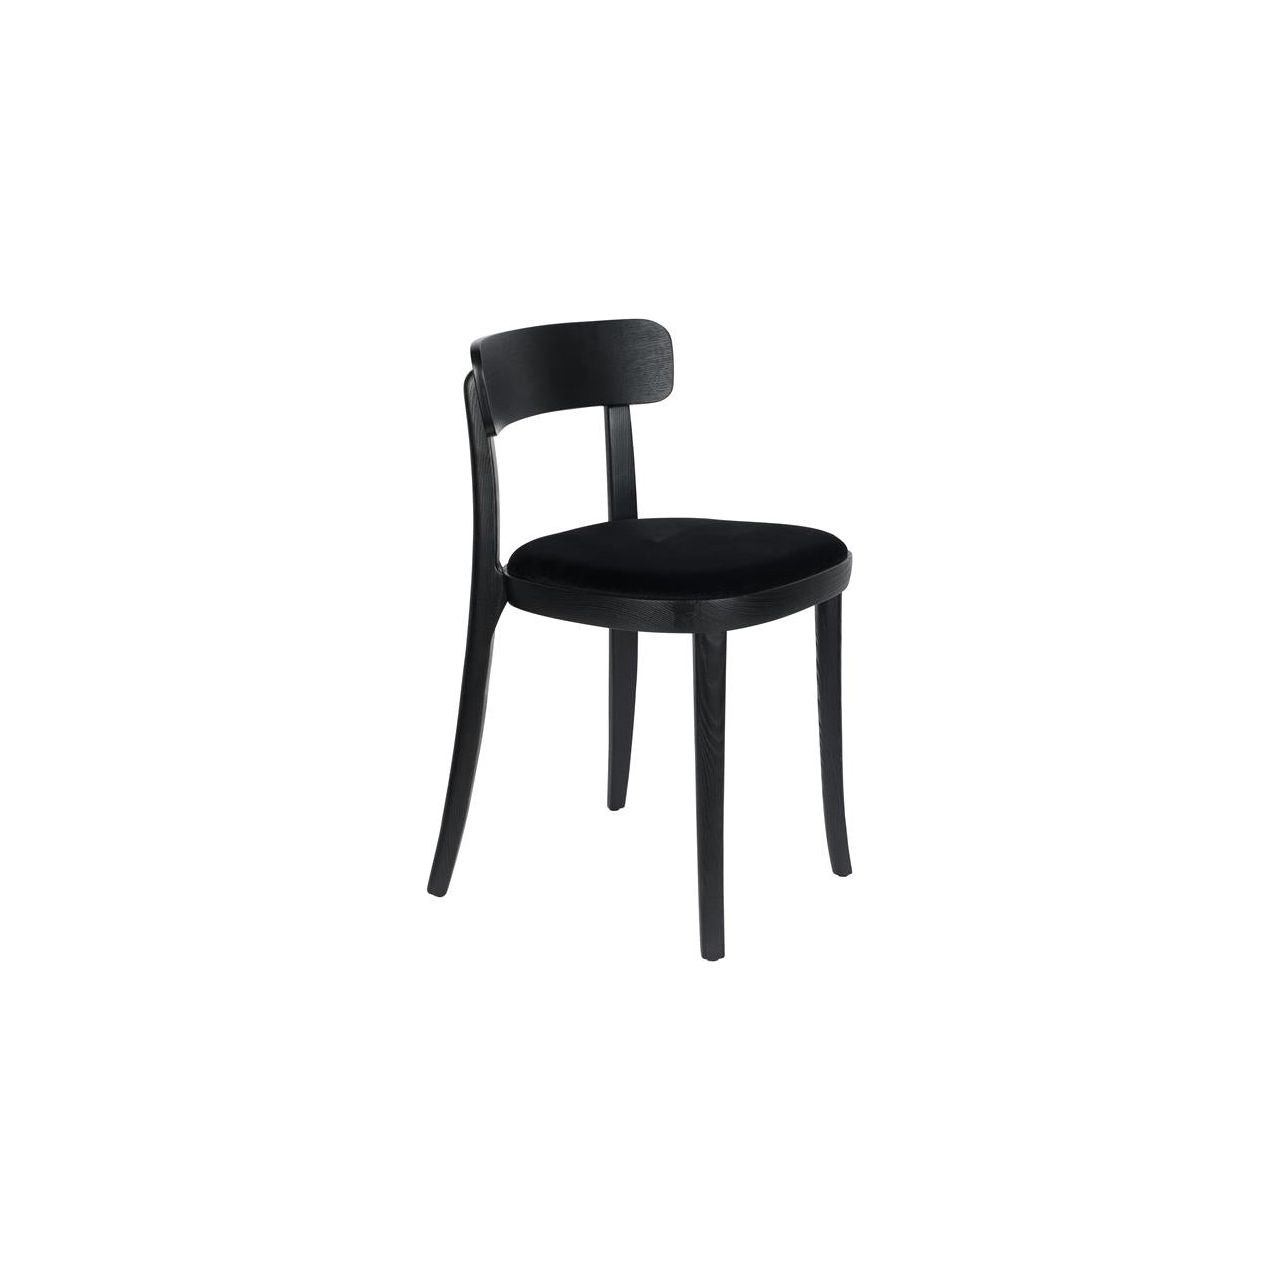 Chair brandon black/black | 2 pieces